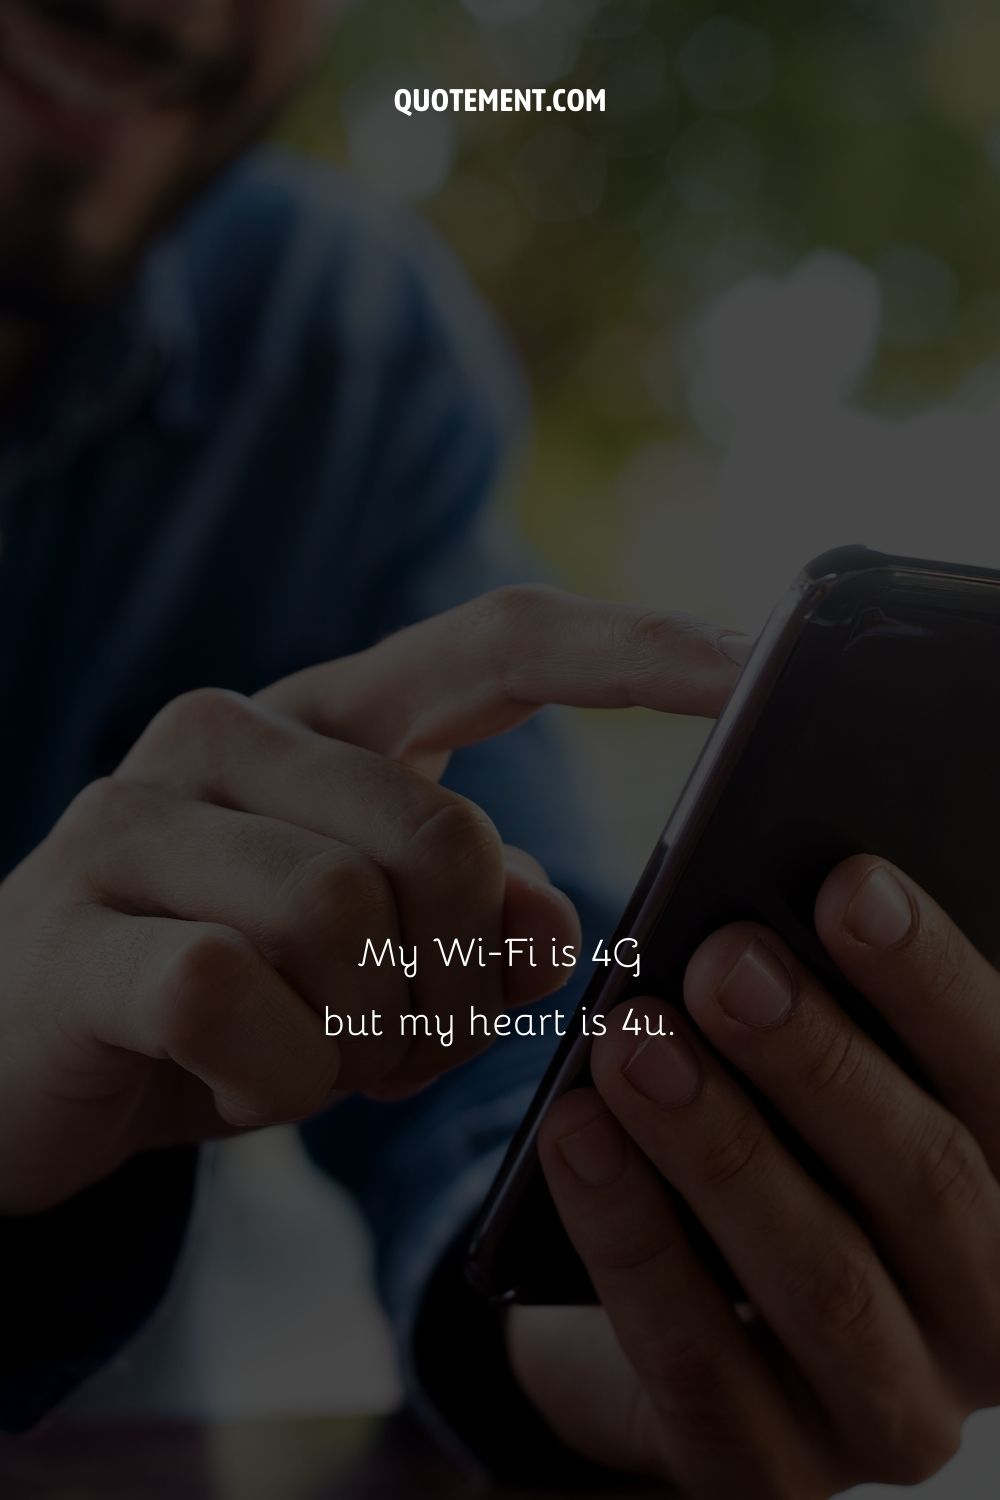 My Wi-Fi is 4G but my heart is 4u.